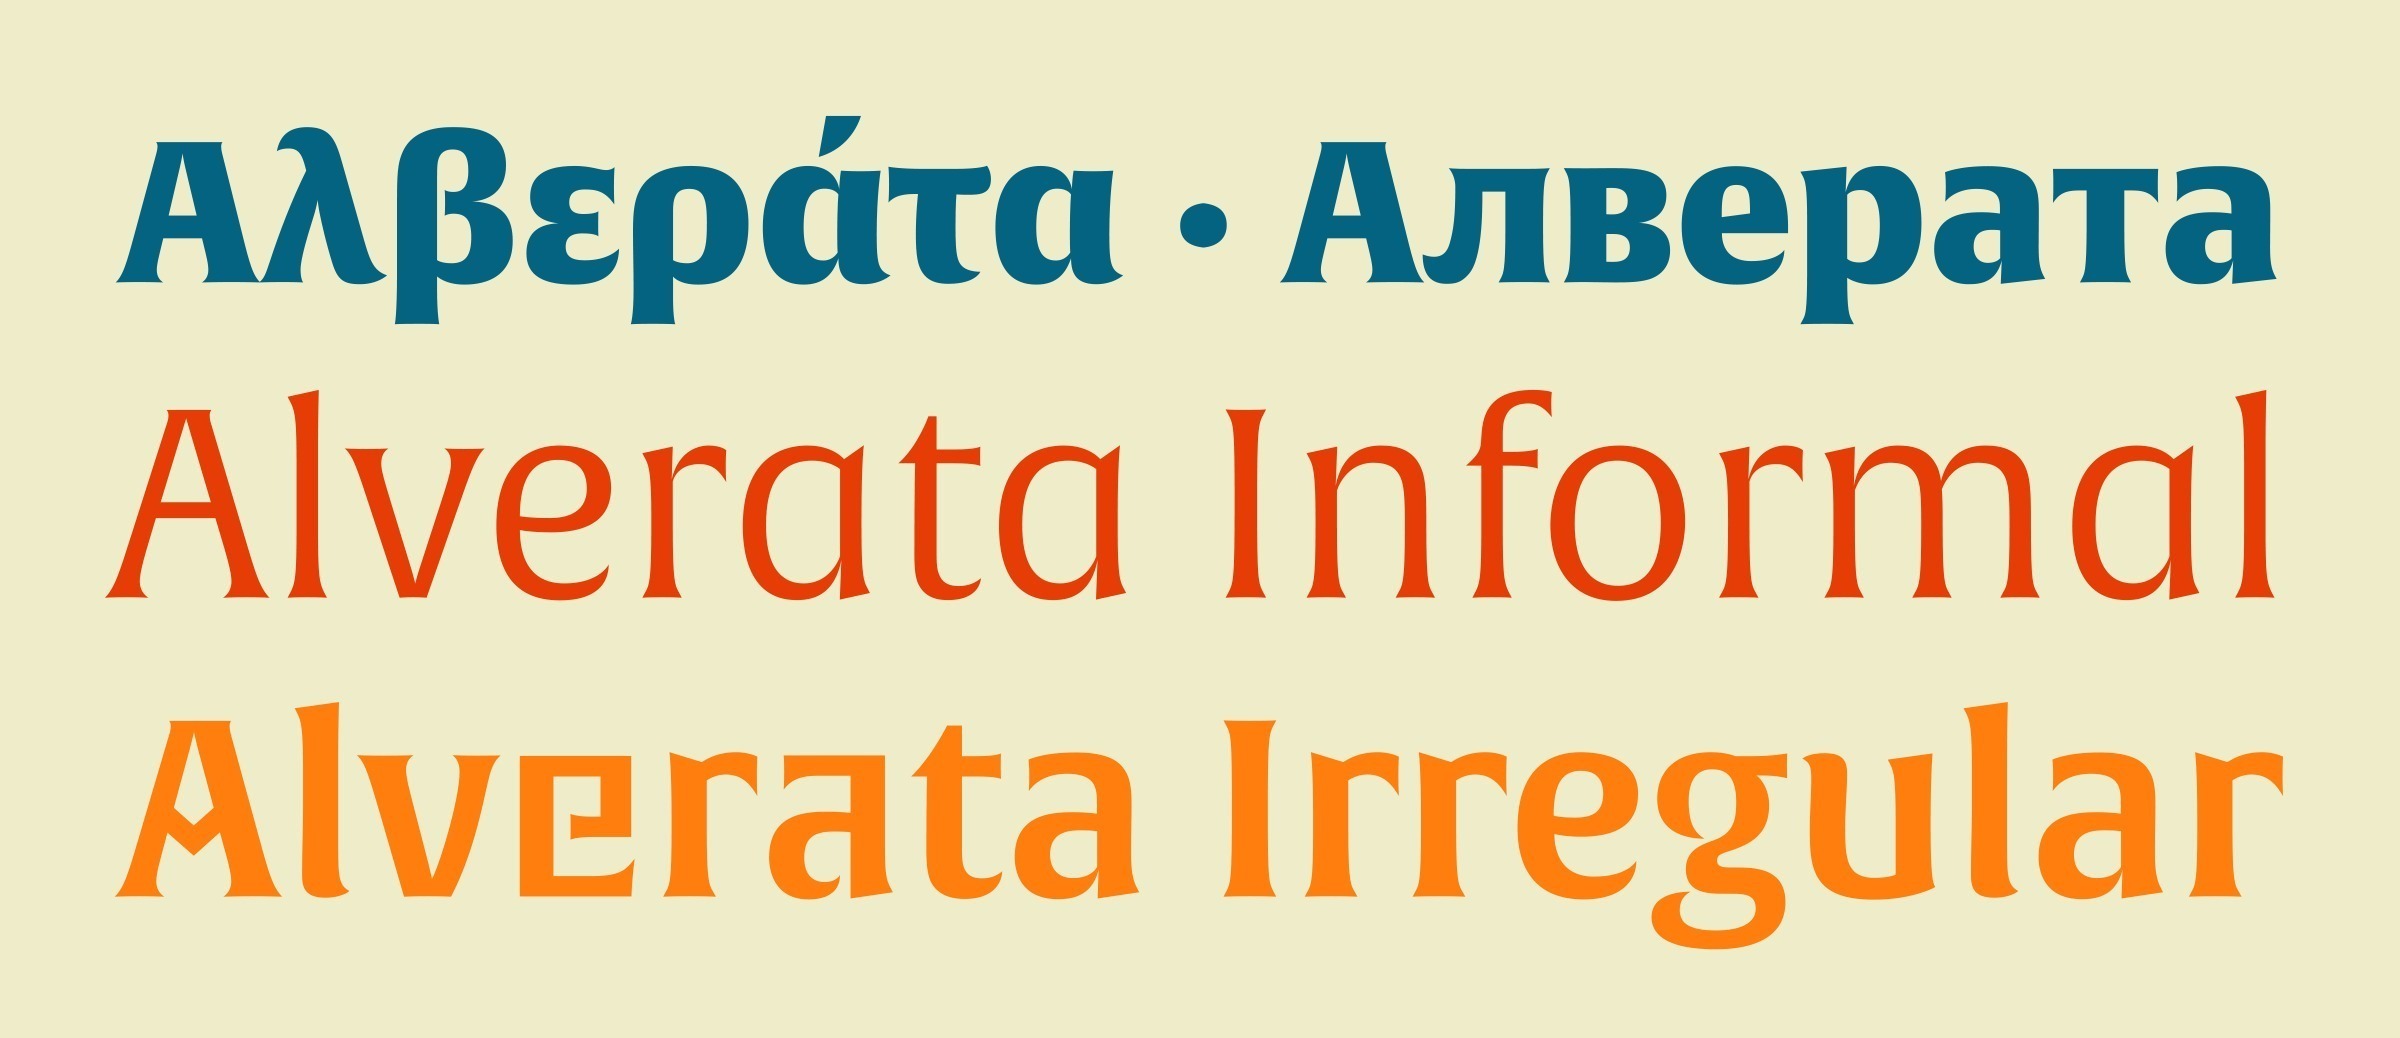 Alverata Greek and Cyrillic, and the Informal and Irregular variants